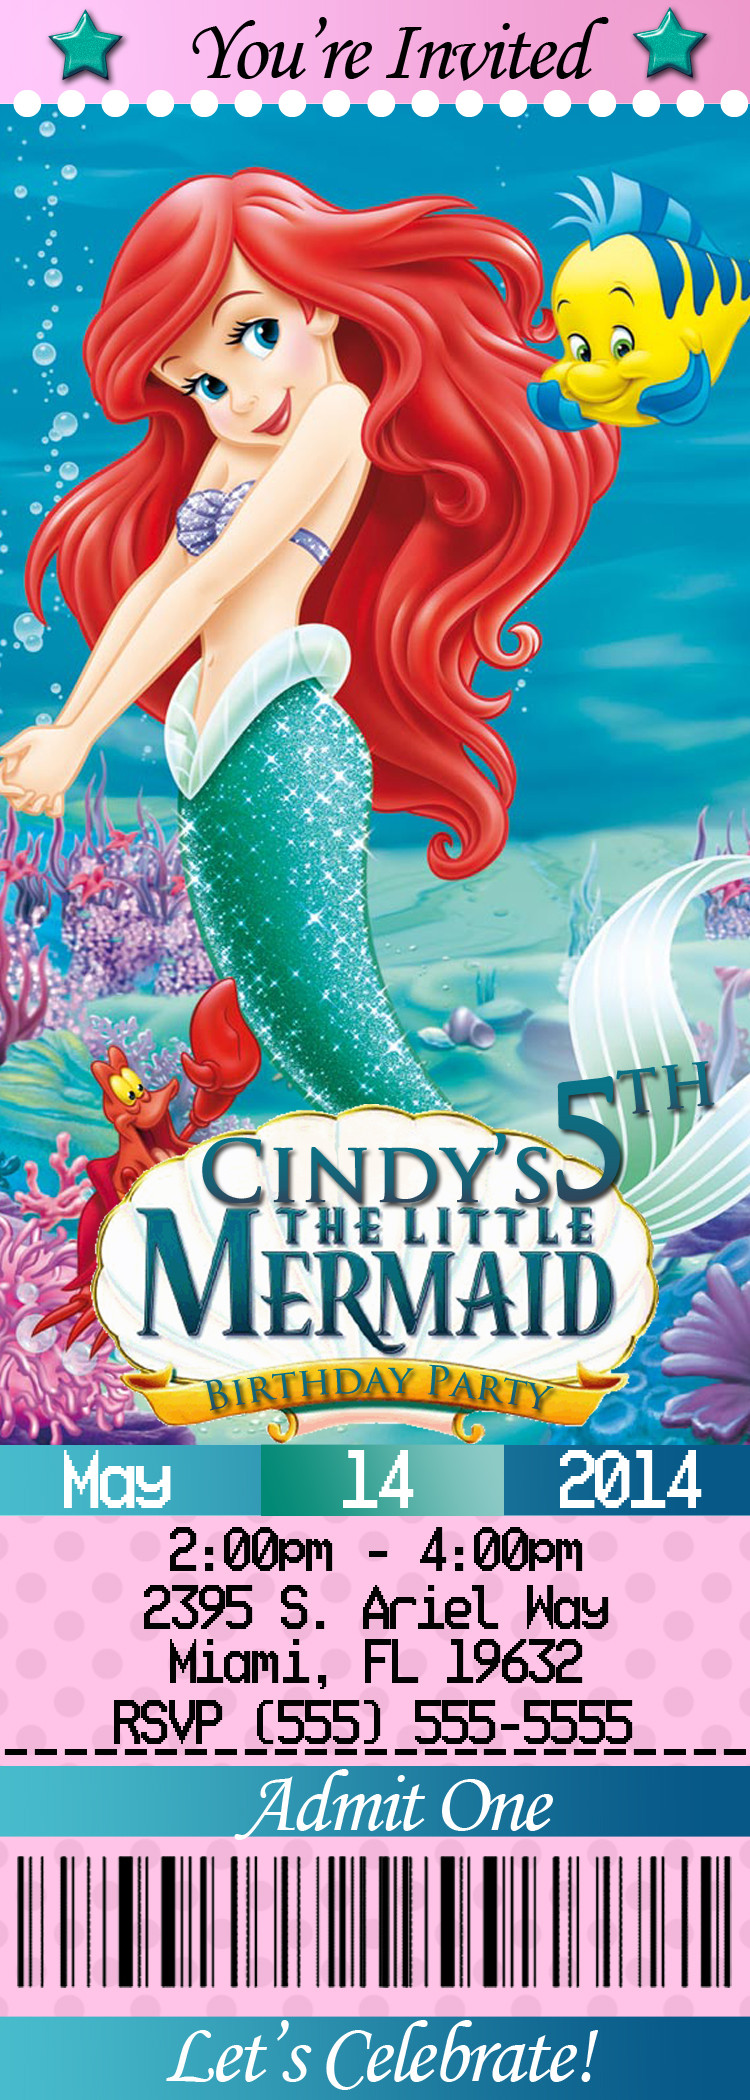 Little Mermaid Birthday Invitations
 Disney Princess Ariel Birthday Invitation